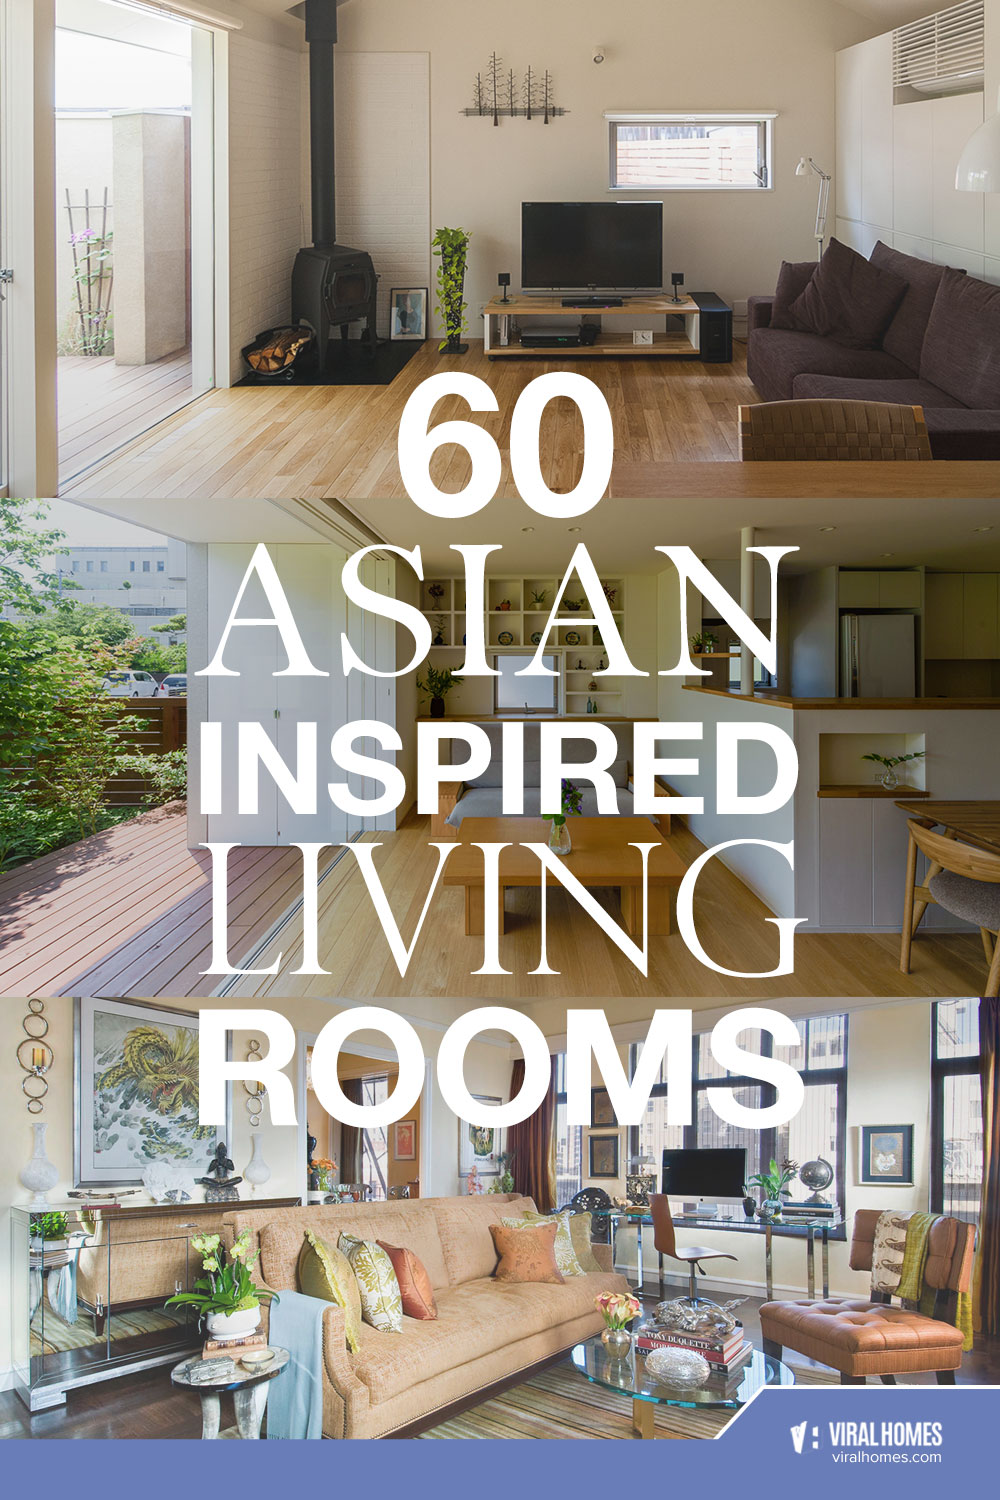 Asian-Inspired Living Room Design Ideas to Add Zen